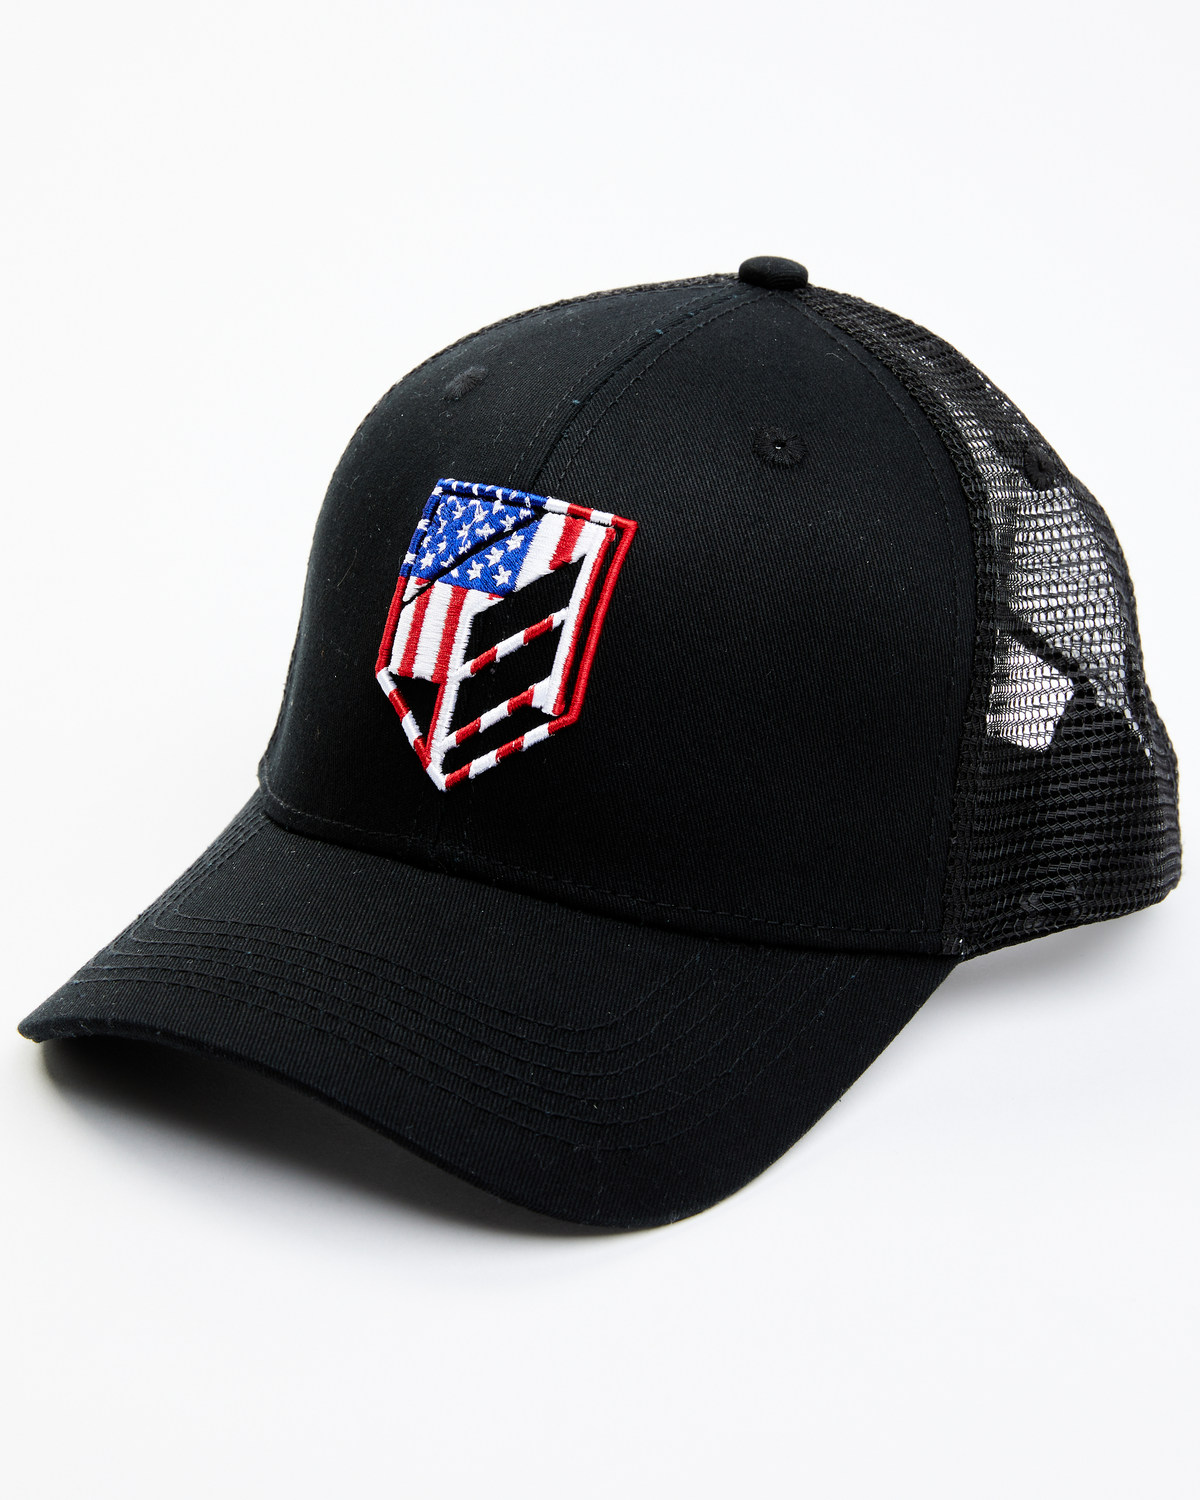 RANK 45® Men's American Flag Shield Patch Mesh-Back Ball Cap